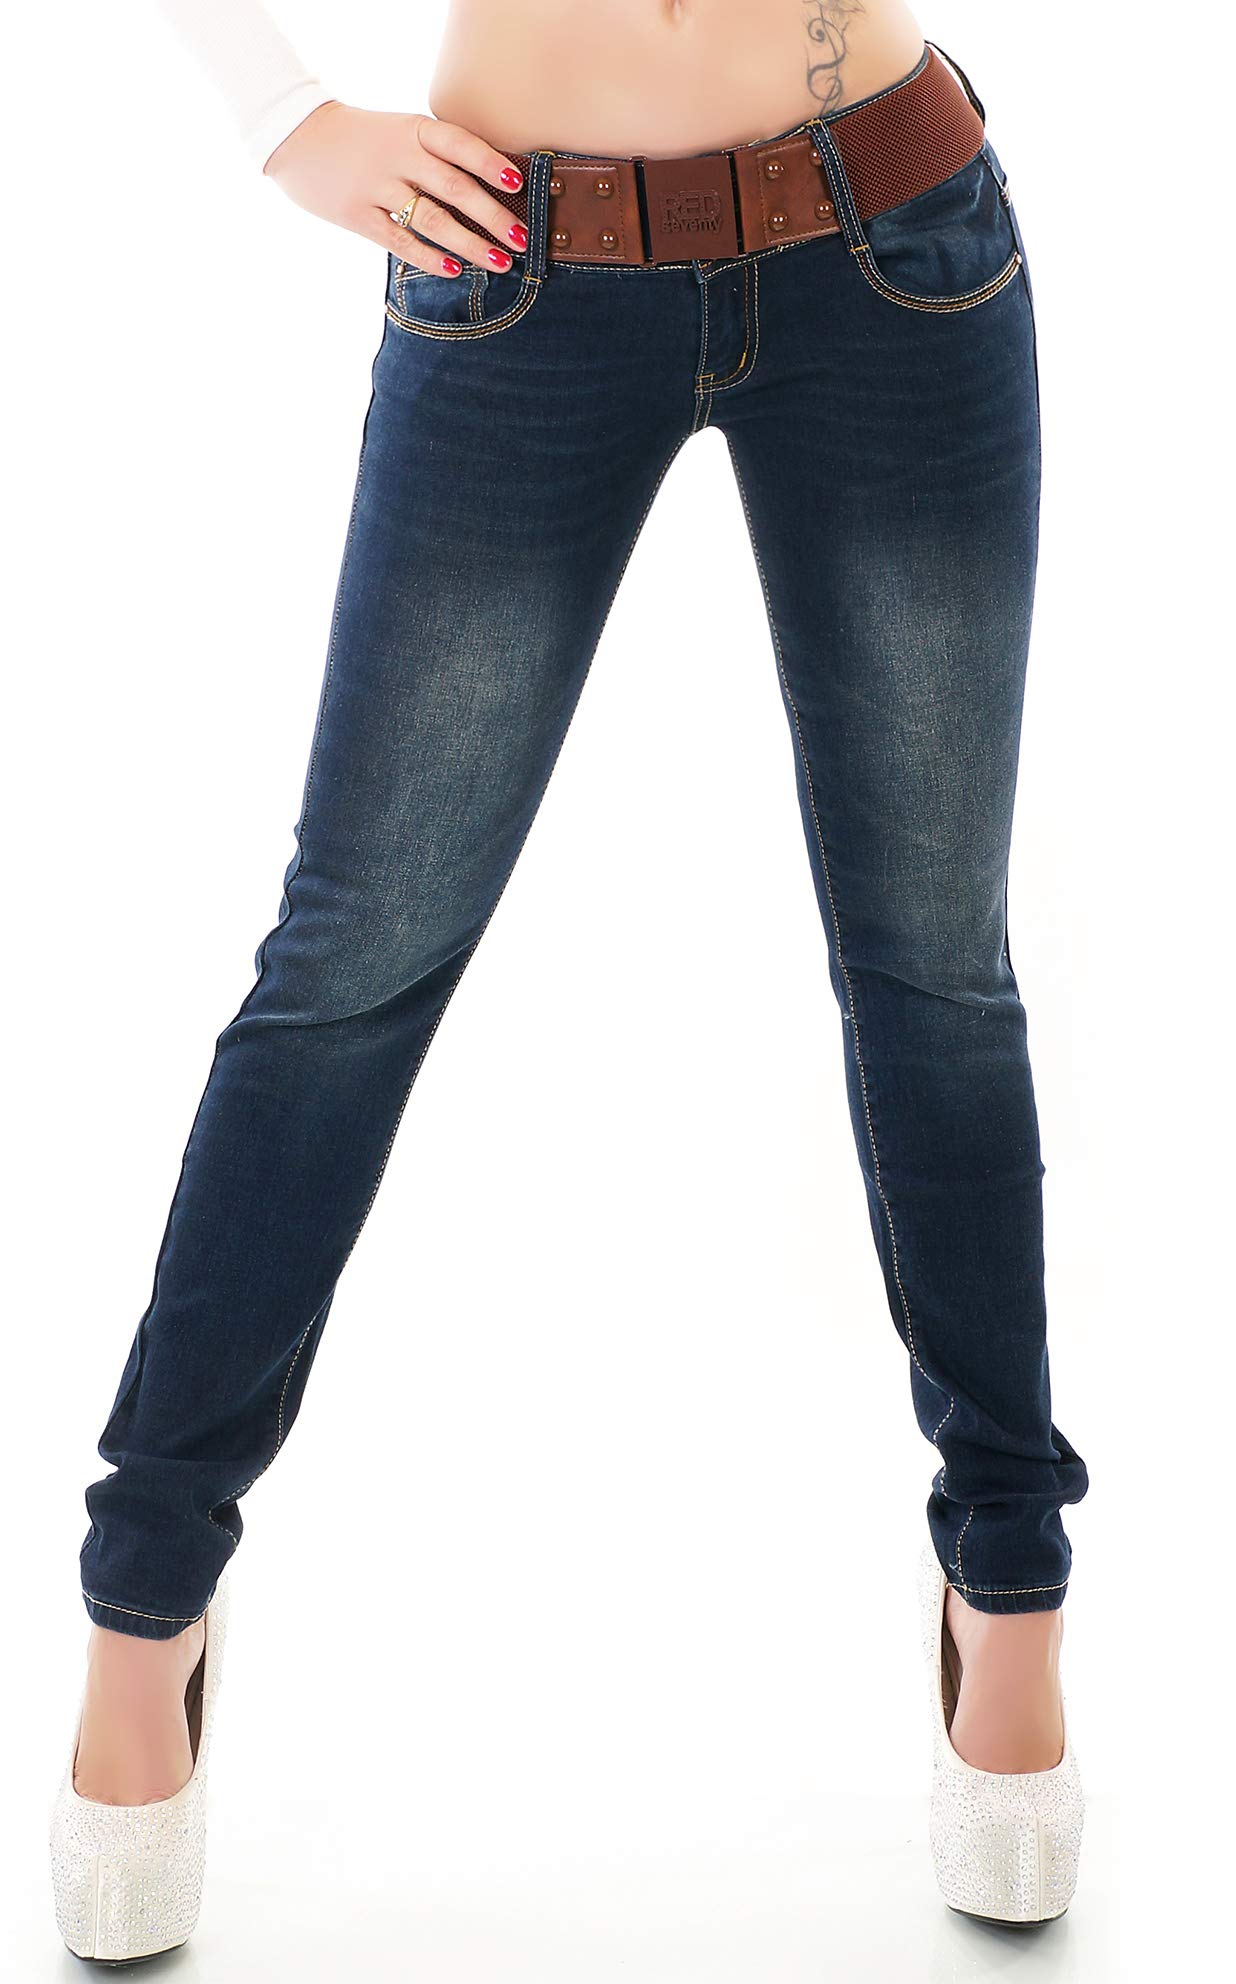 xy Damen Röhrenjeans Hose Jeans Denim Skinny Stretch mit braunem Gürtel (XS)